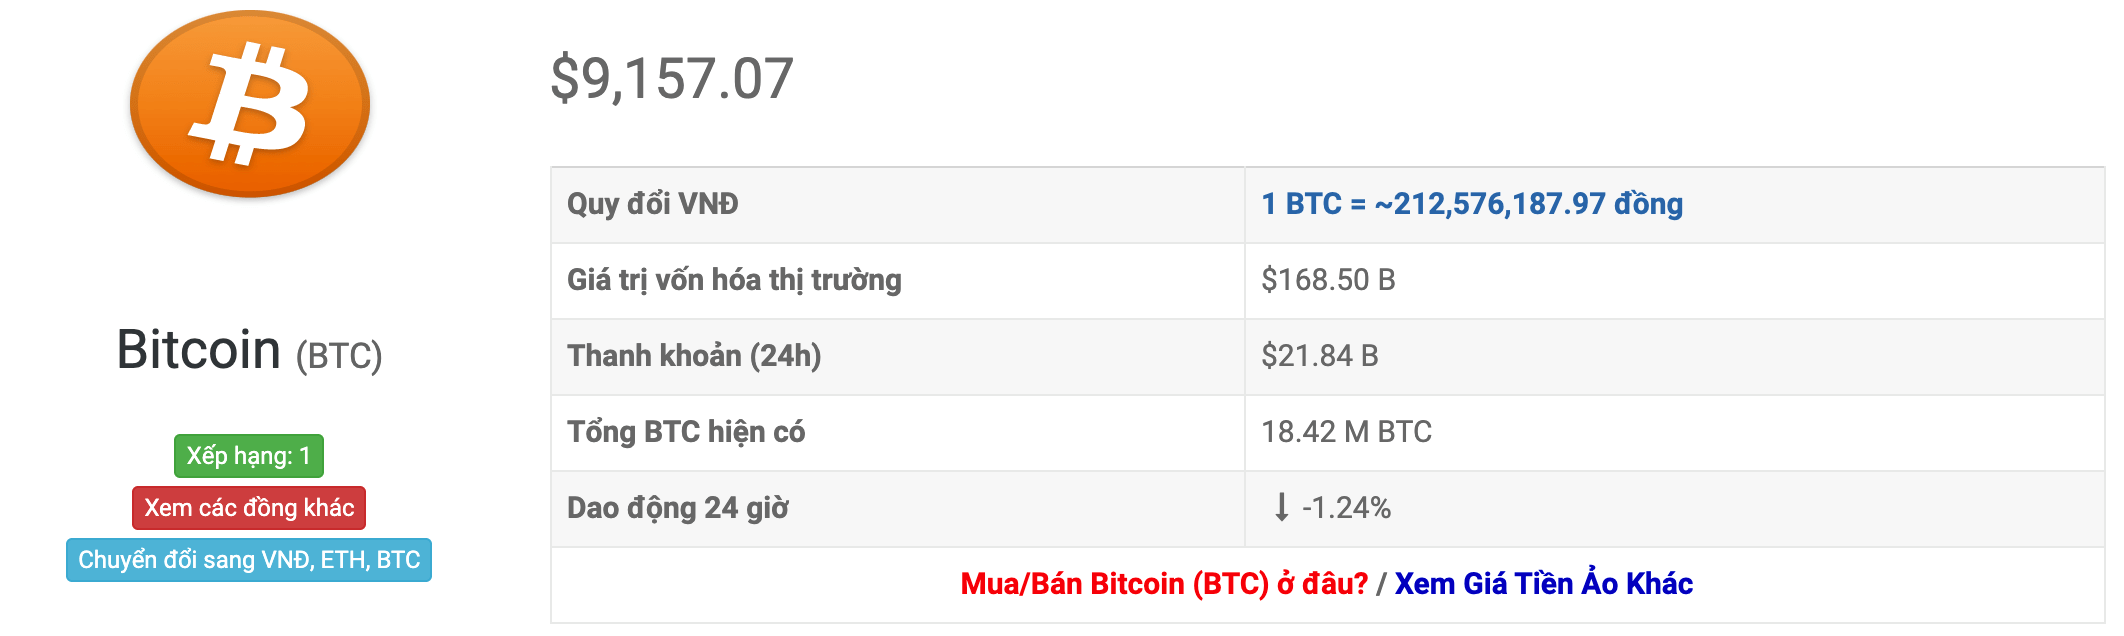 Směnný kurz bitcoinů